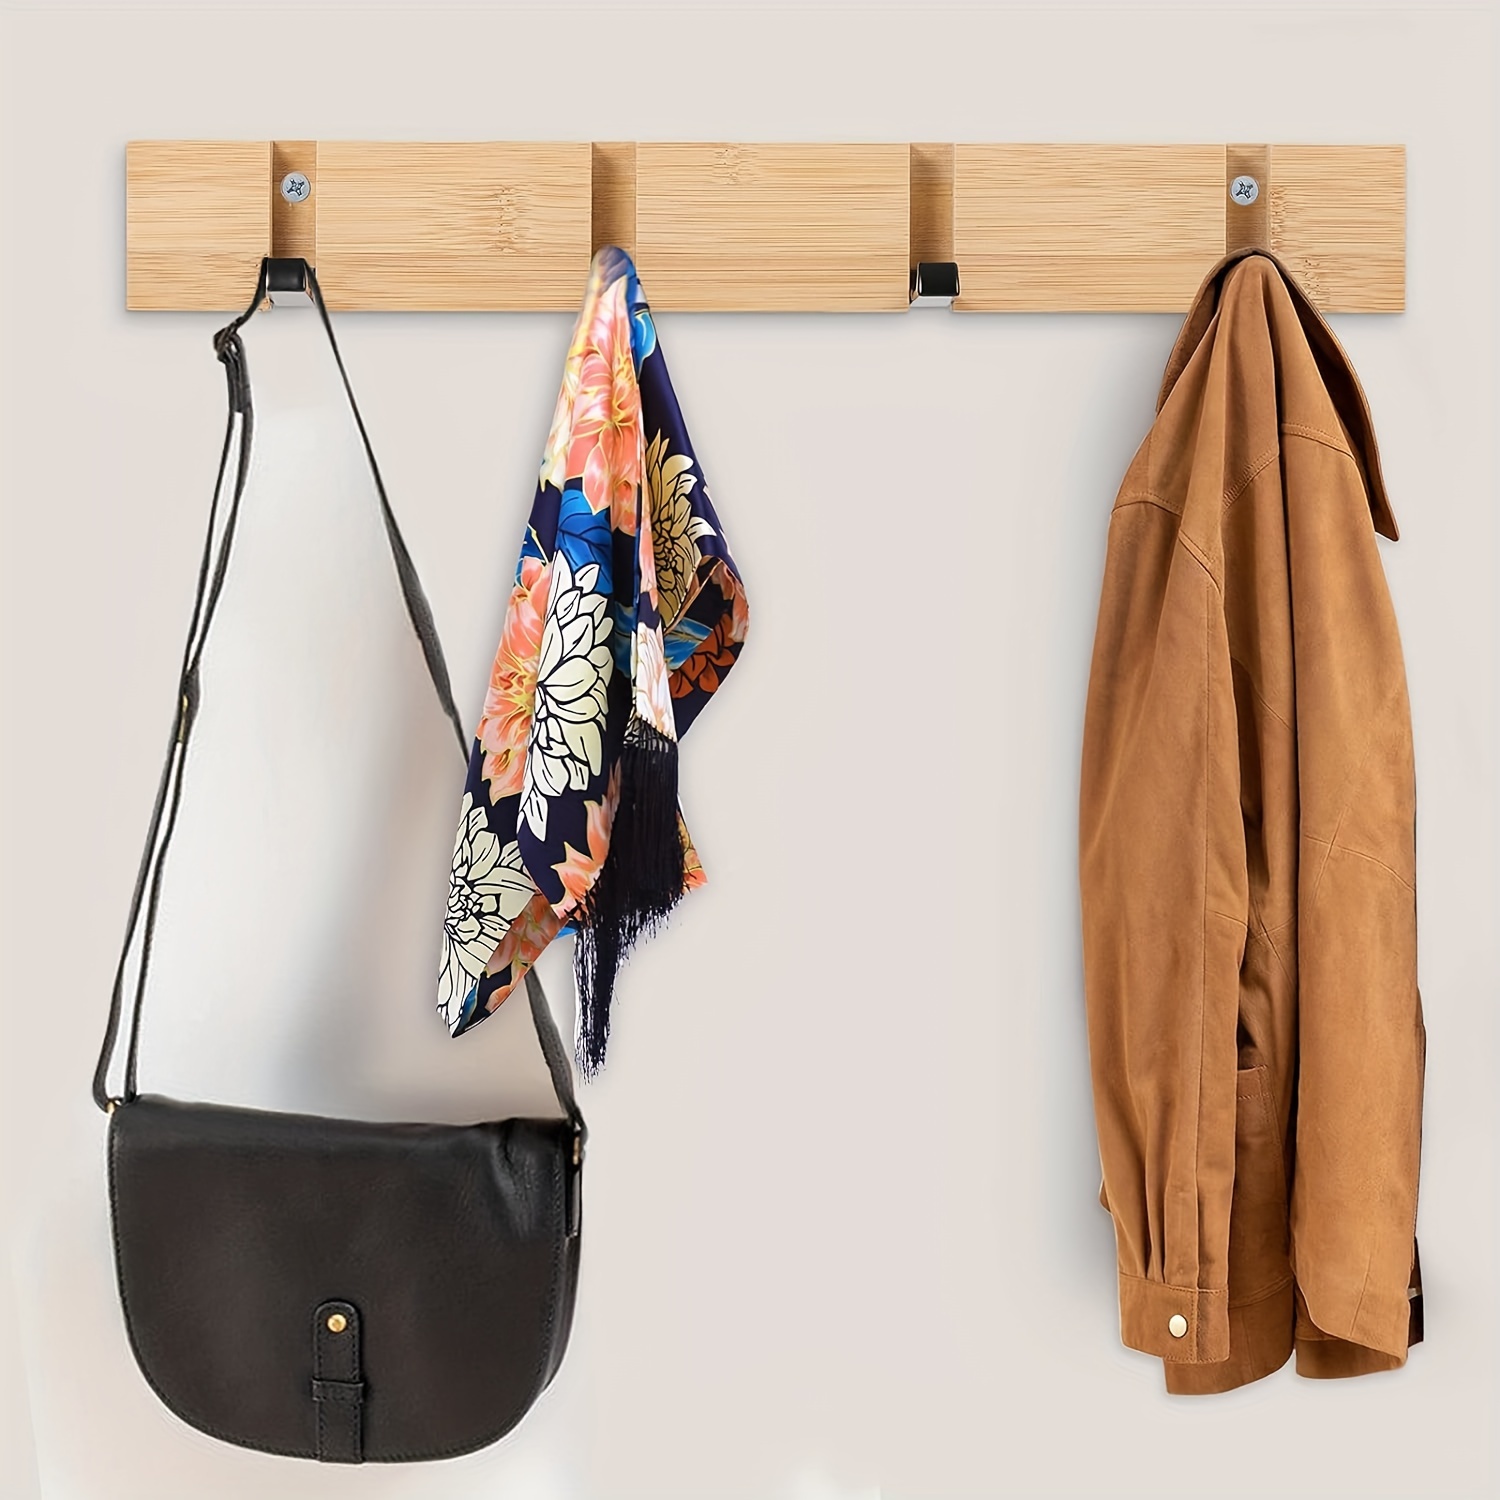 Wall Coat Rack With 3 Retractable Hooks, Wall Mounted Coat Rack For Hanging  Coats, Scarves, Handbags